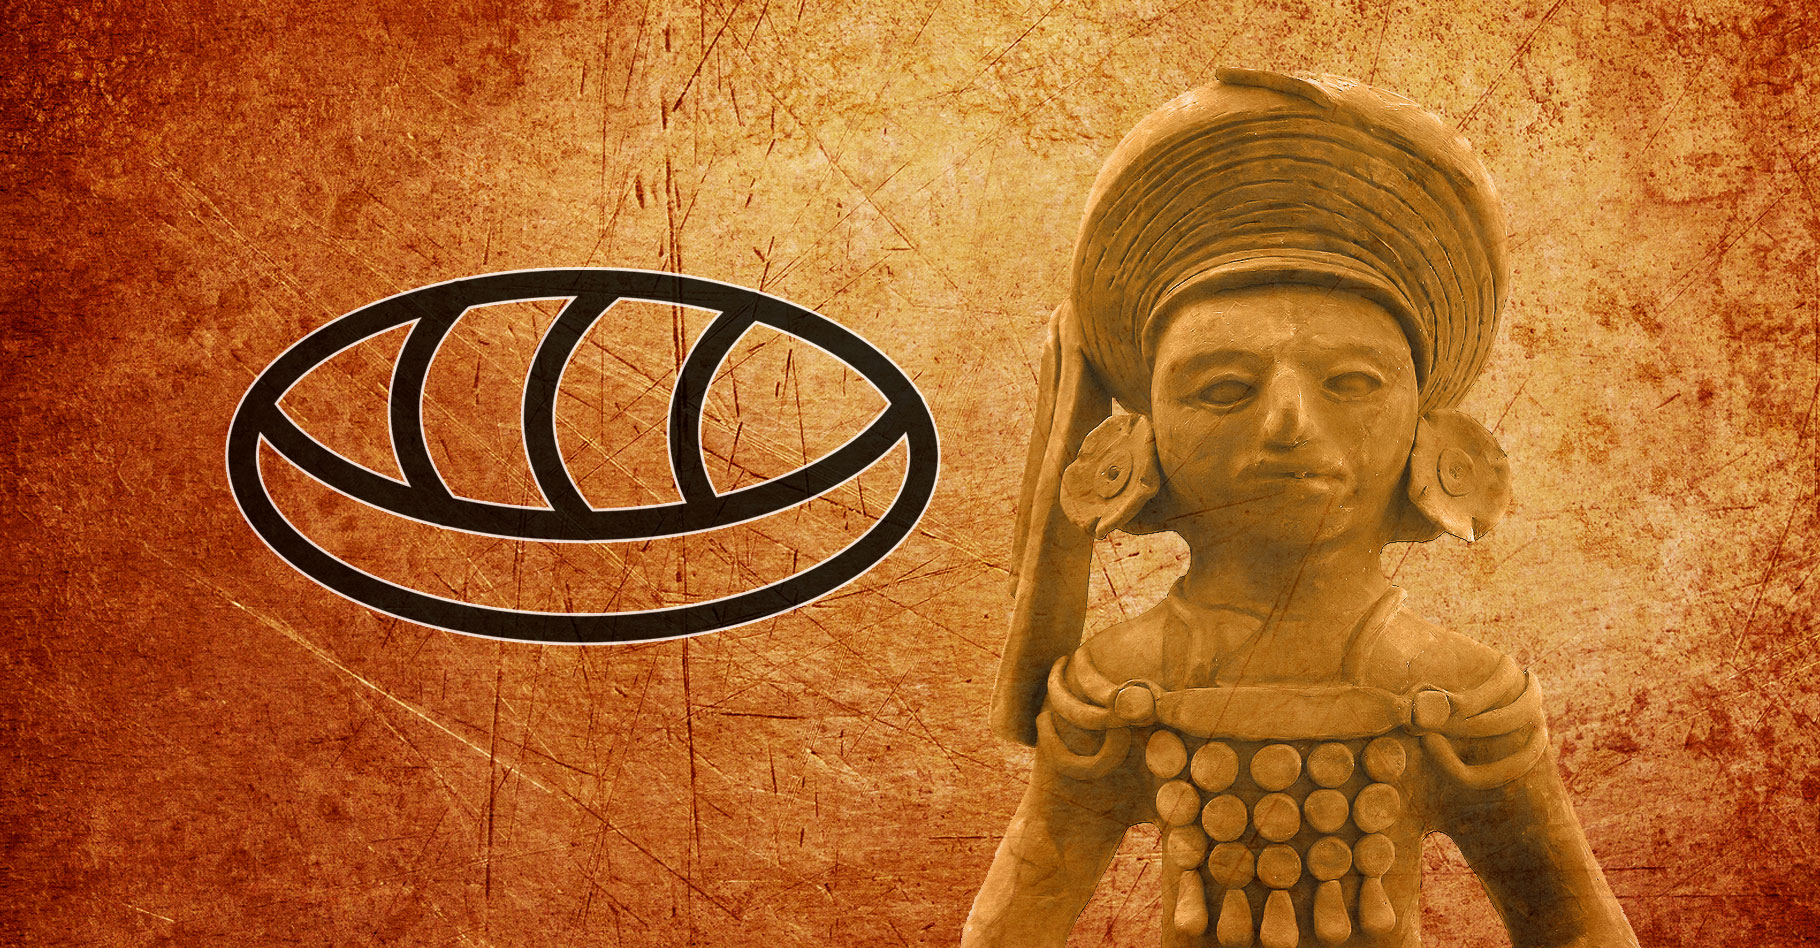 Le chiffre zéro des Mayas.&nbsp;© TheDigitalArtis, Pixabay, DP